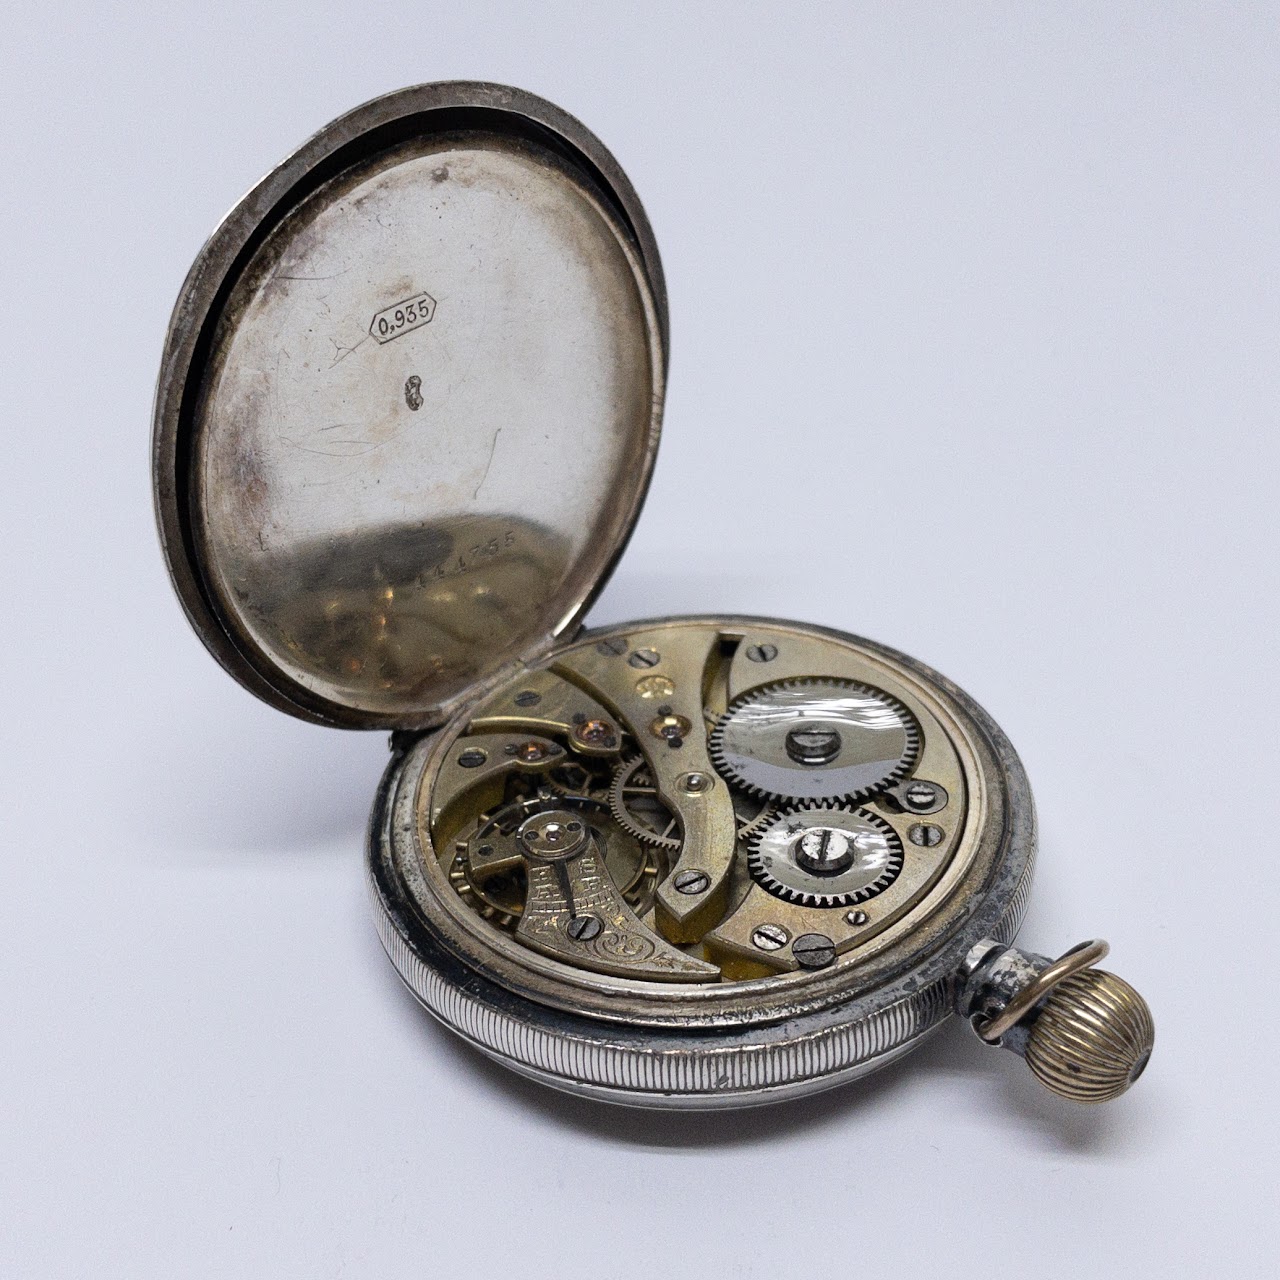 West End "Competition" Antique Pocket Watch